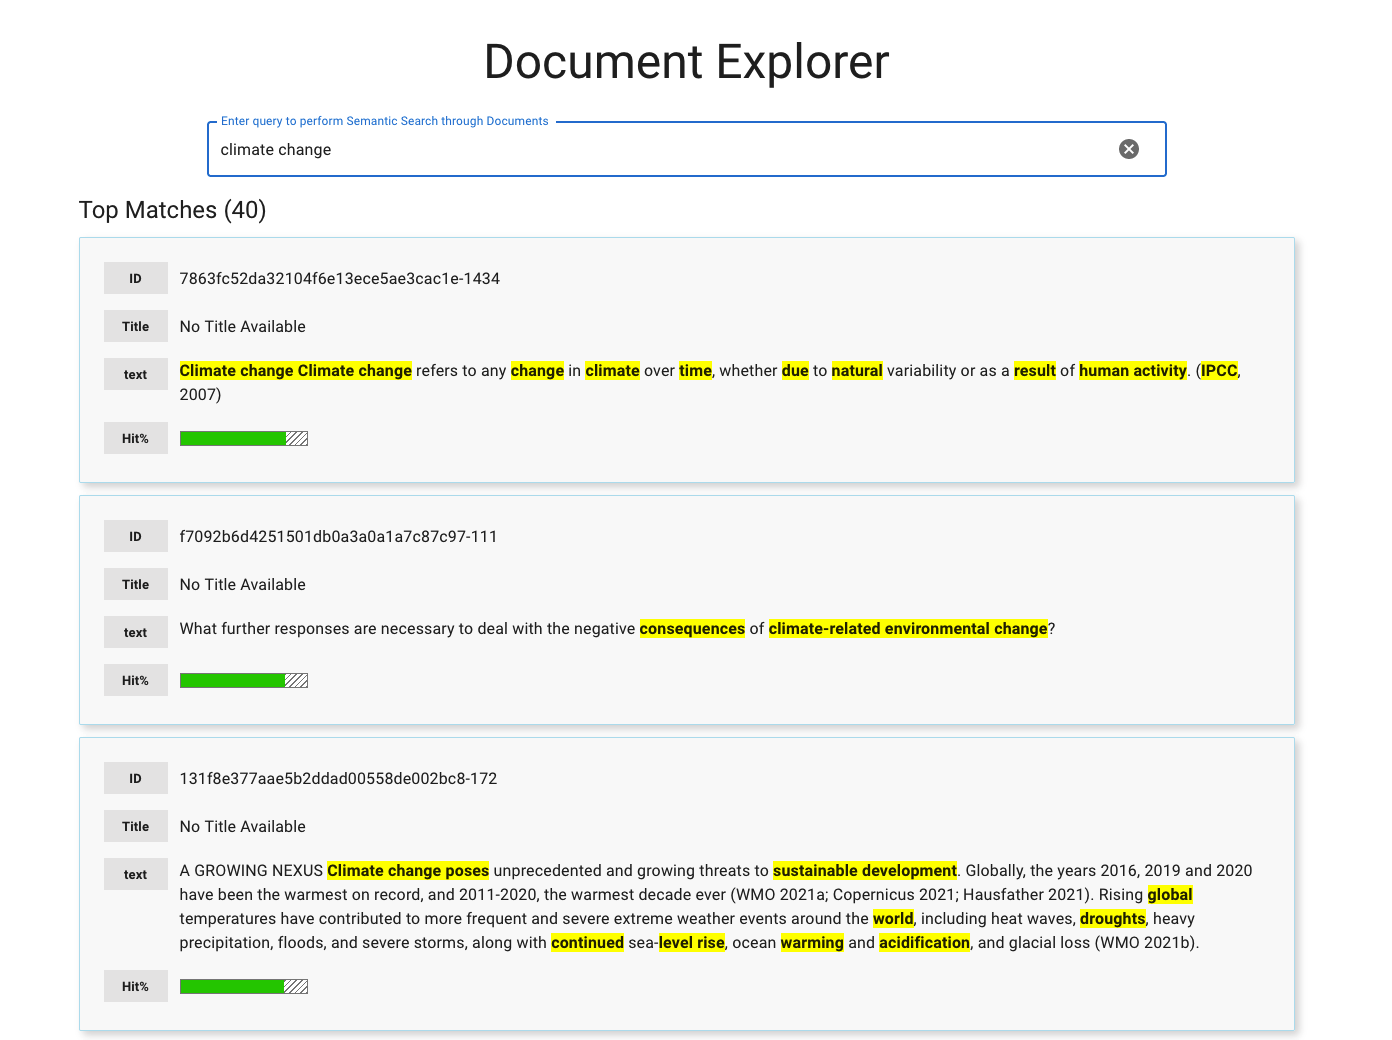 Document Explorer Search